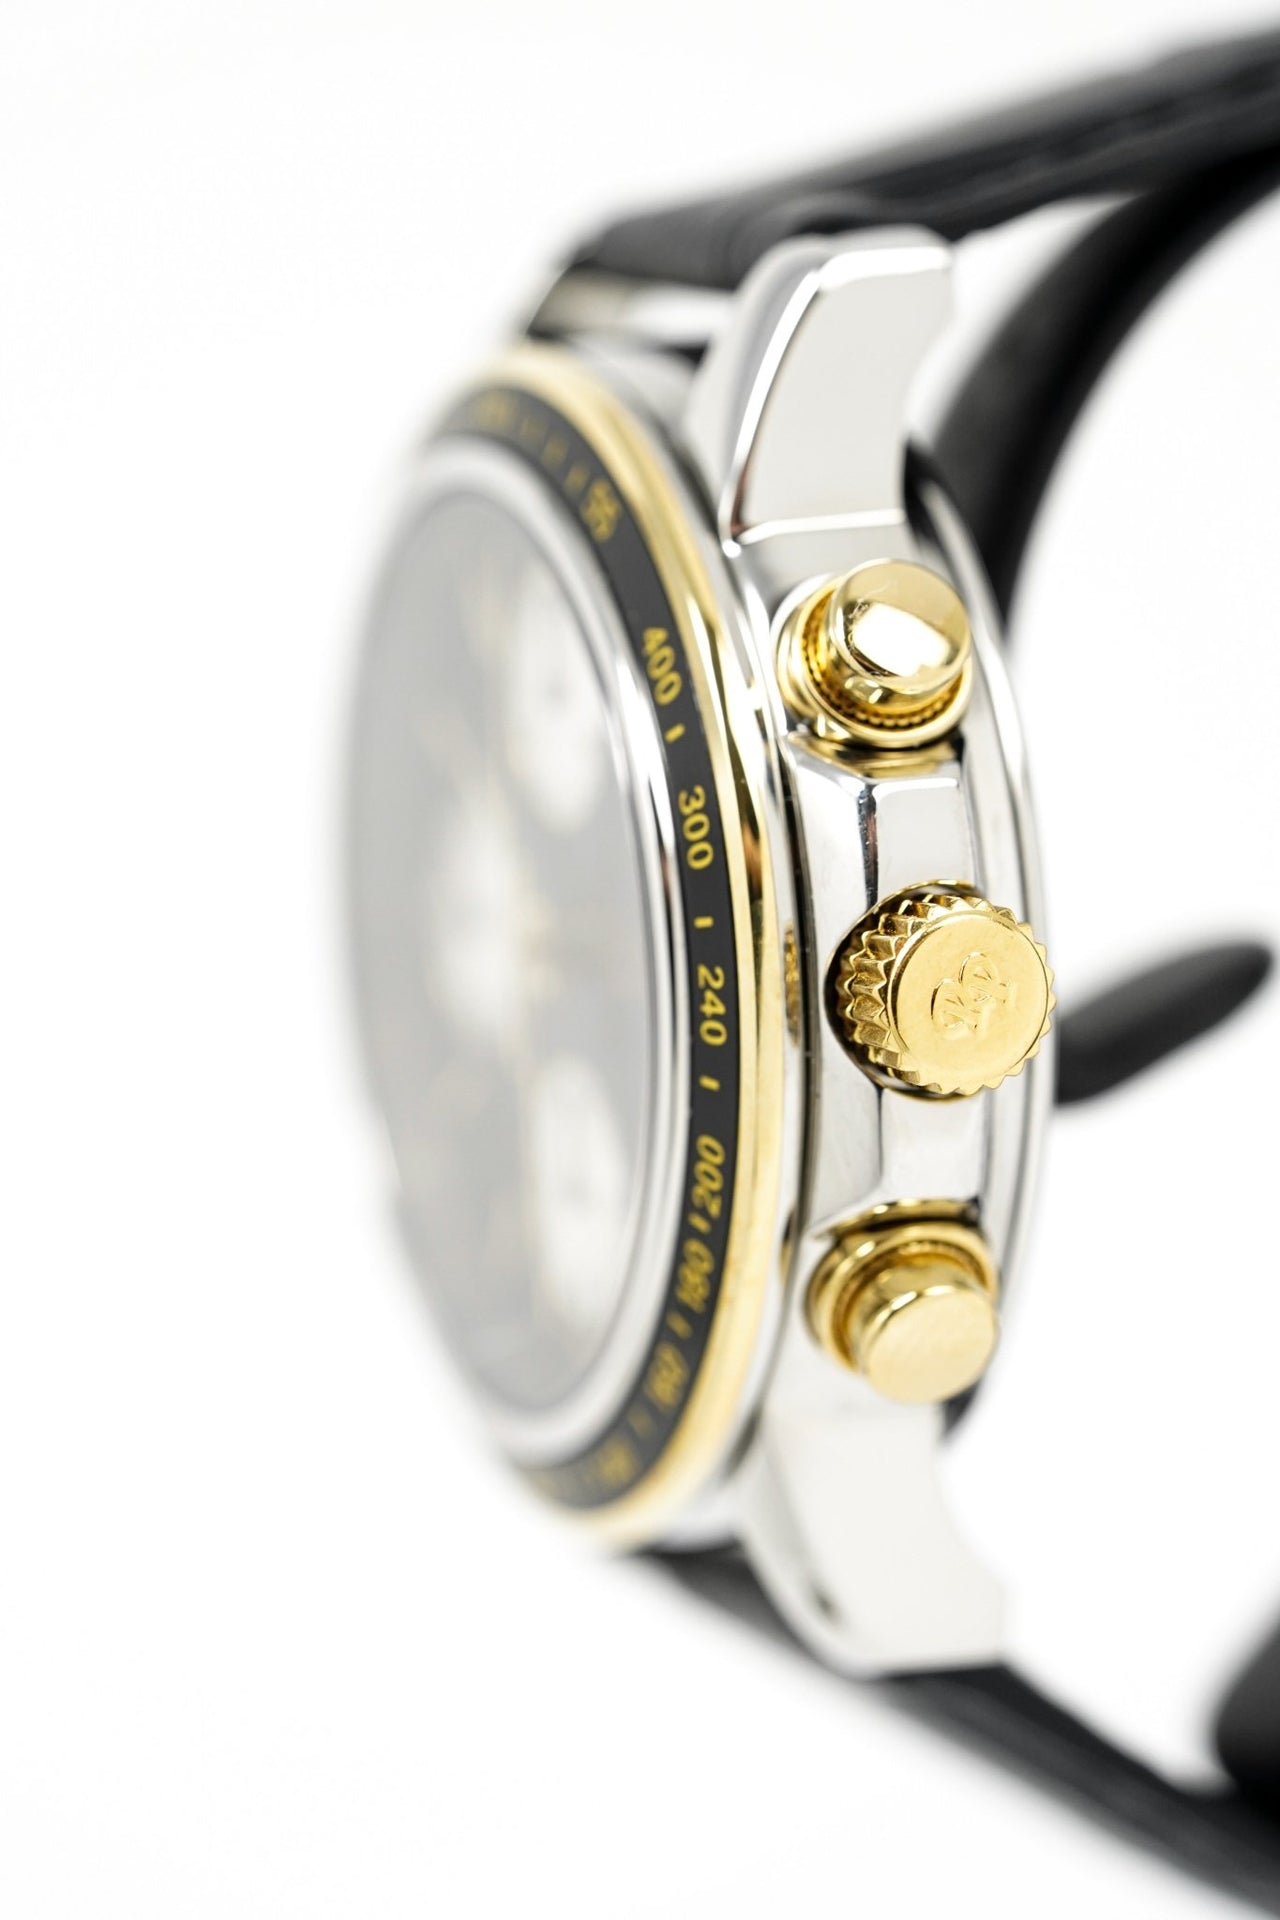 Paul Picot Men's Watch Chronosport Chronograph Black P7005.322.372 - Watches & Crystals